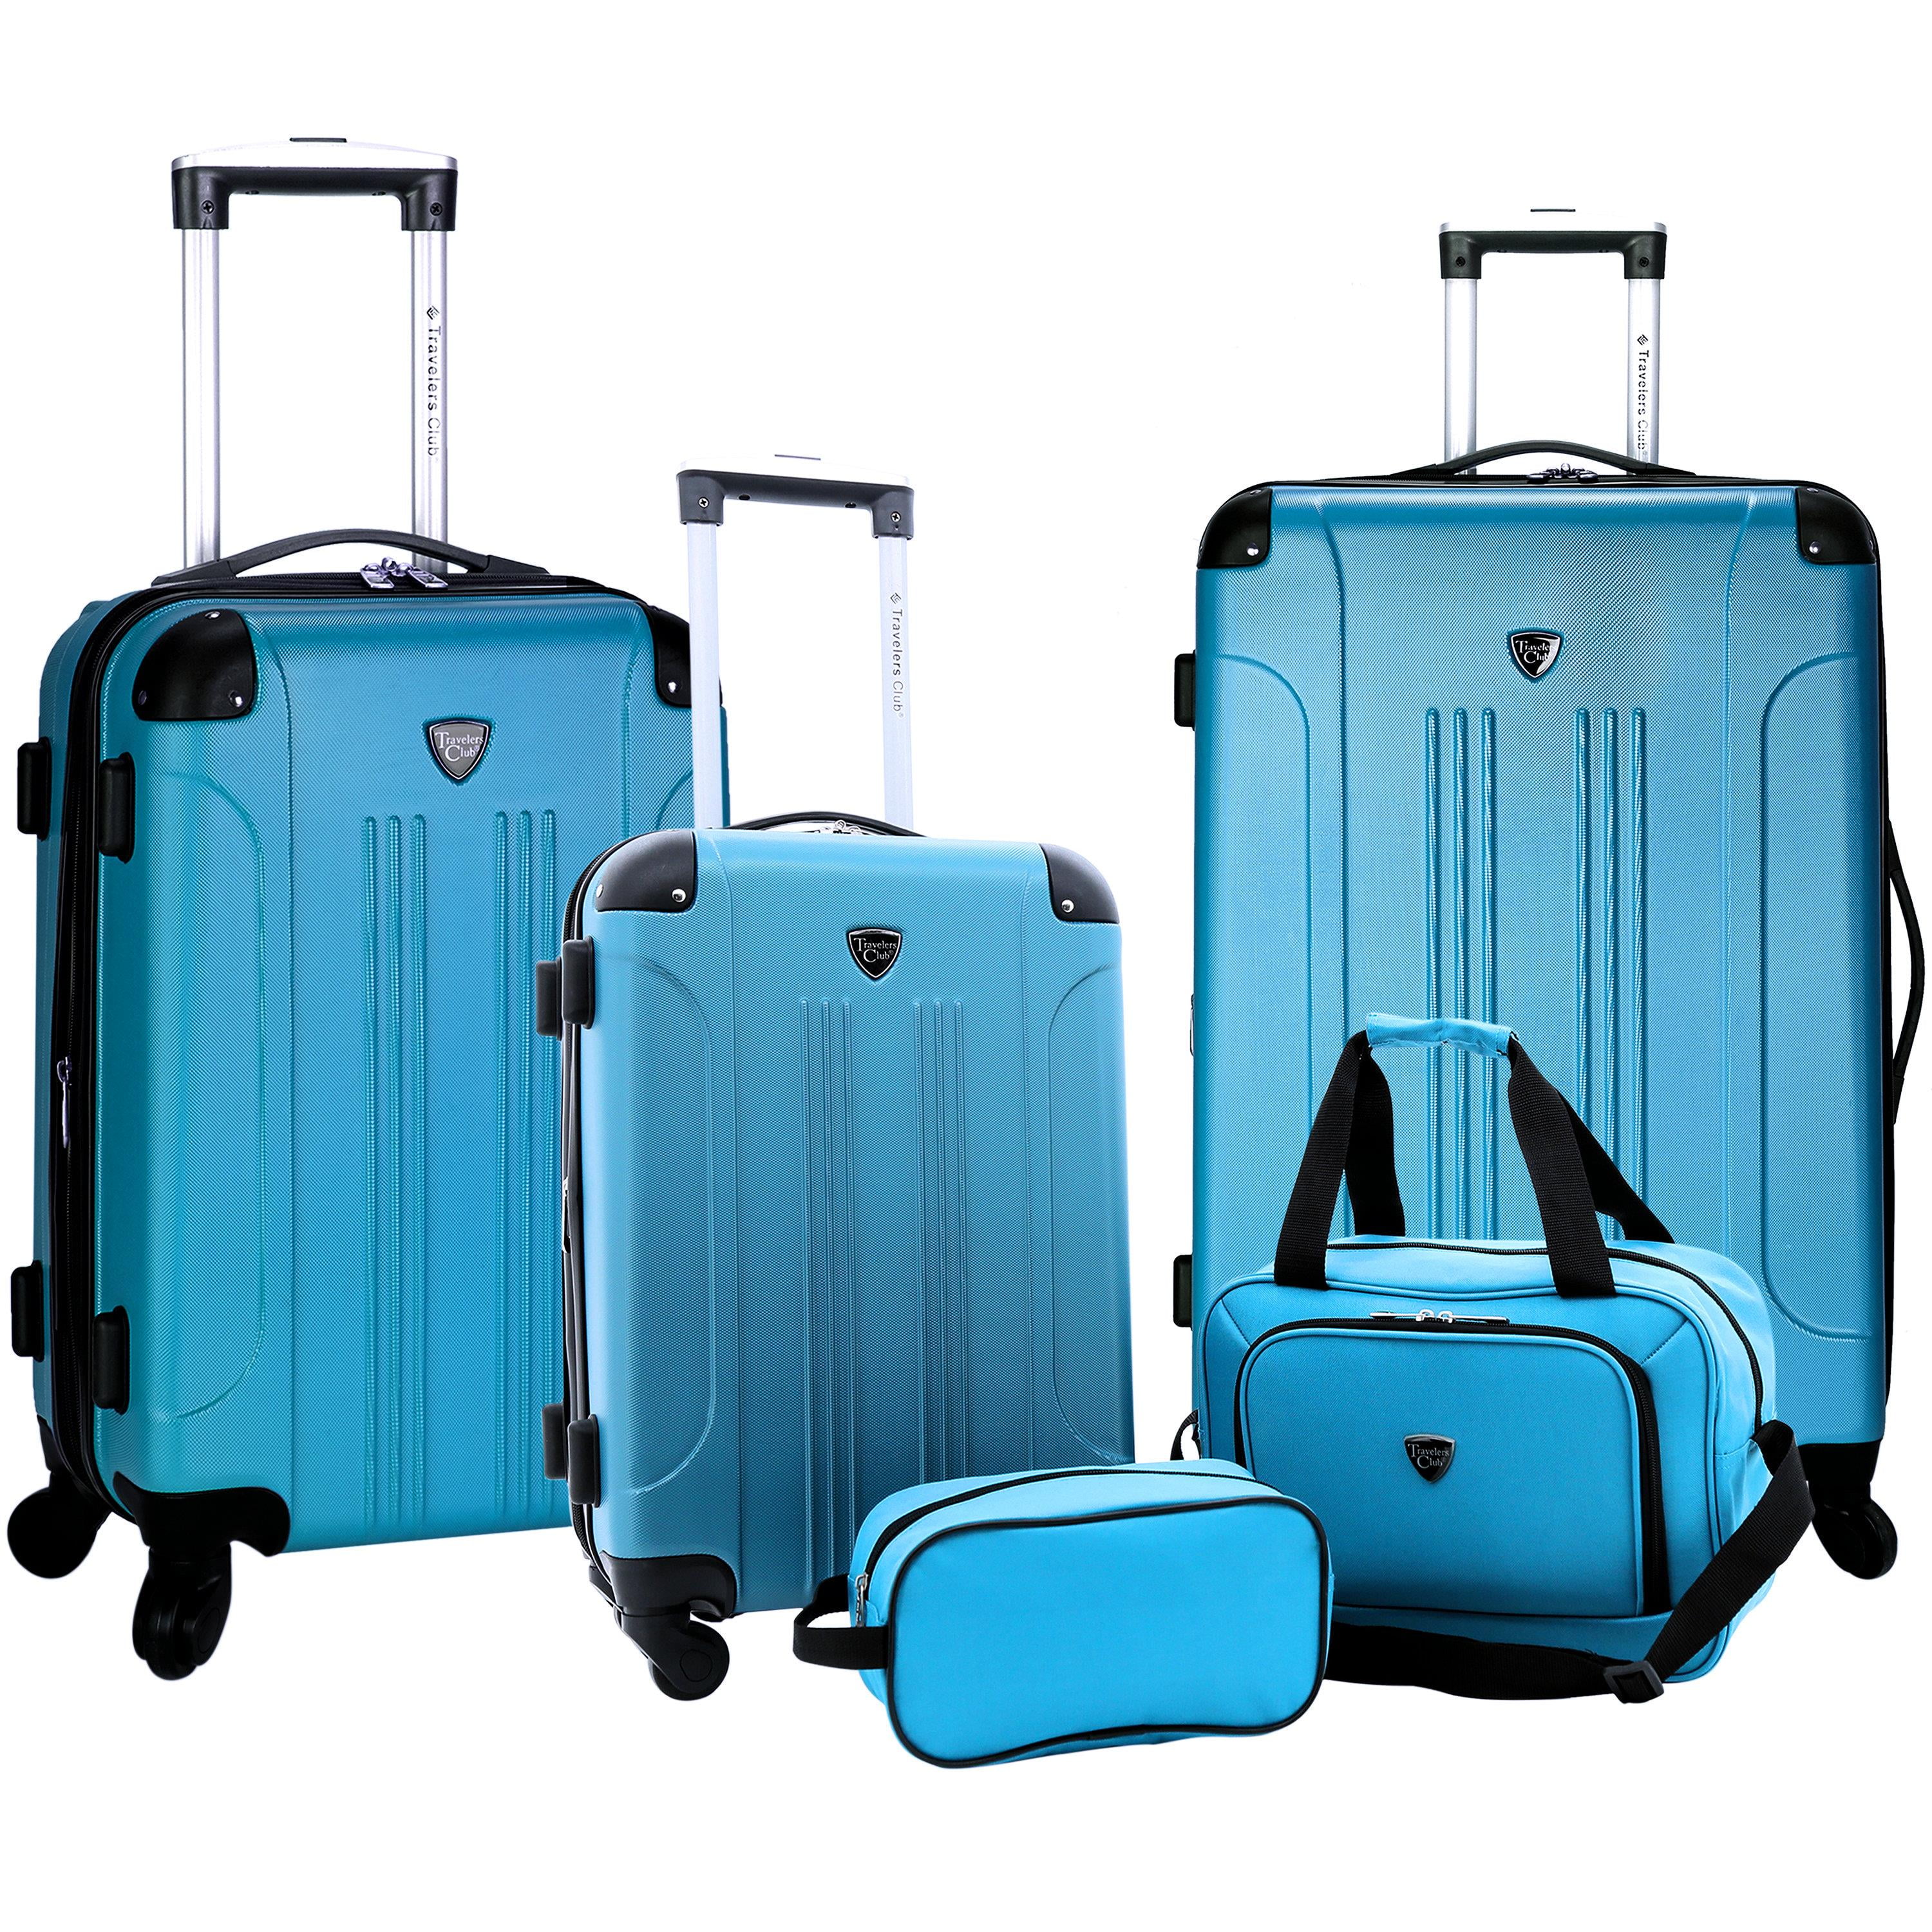 travellers luggage set